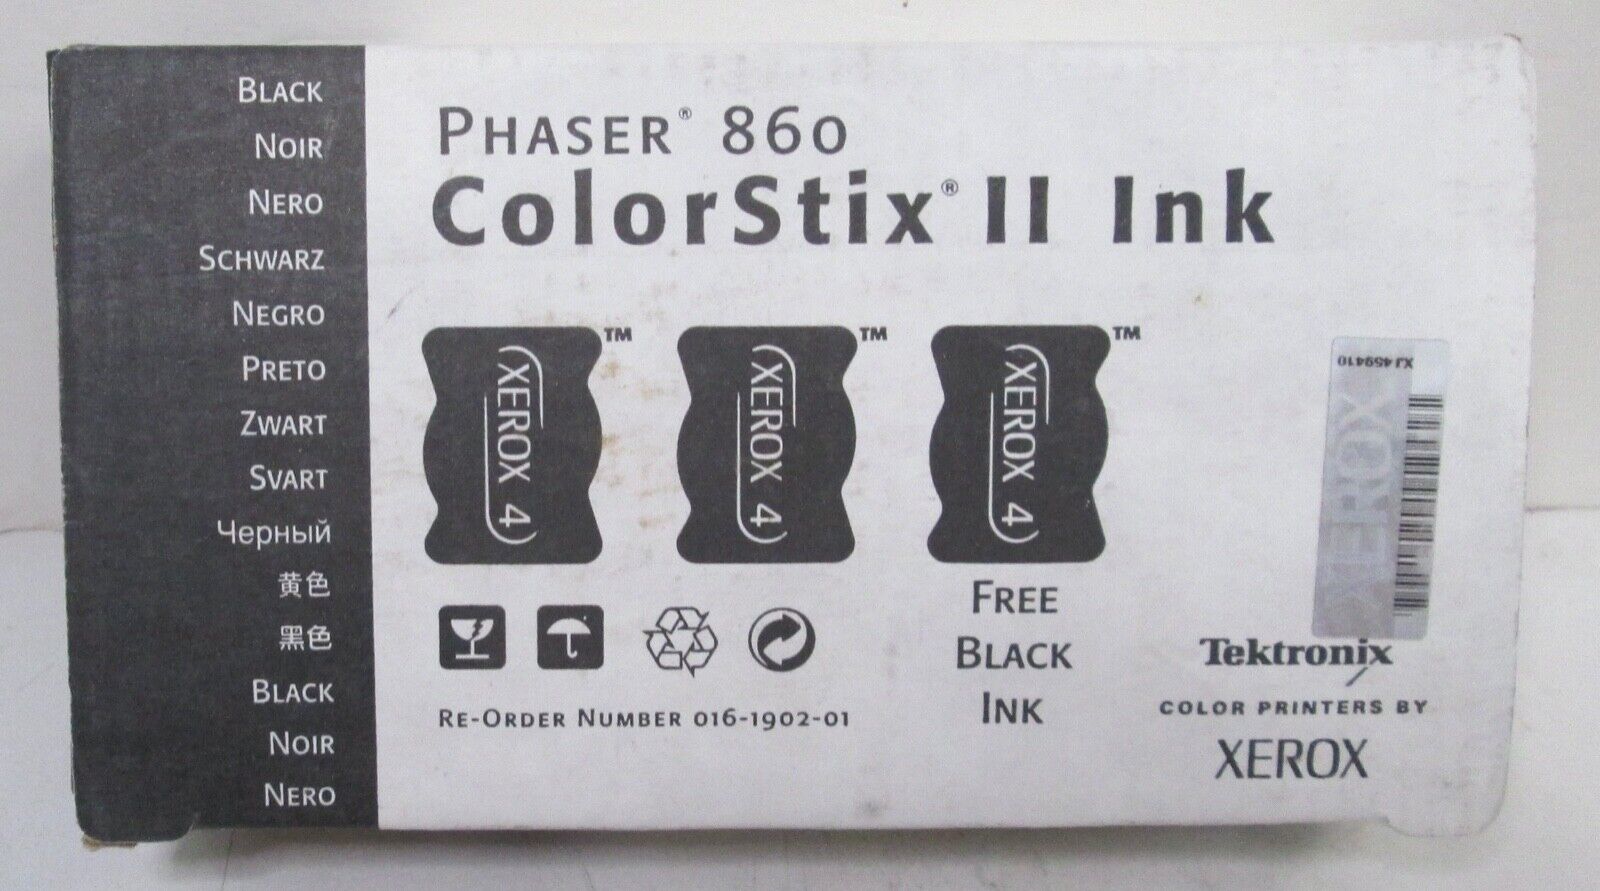 GENUINE XEROX TEKTRONIX PHASER 860 COLORSTIX 2 BLACK SOLID INK STICK 016-1902-01